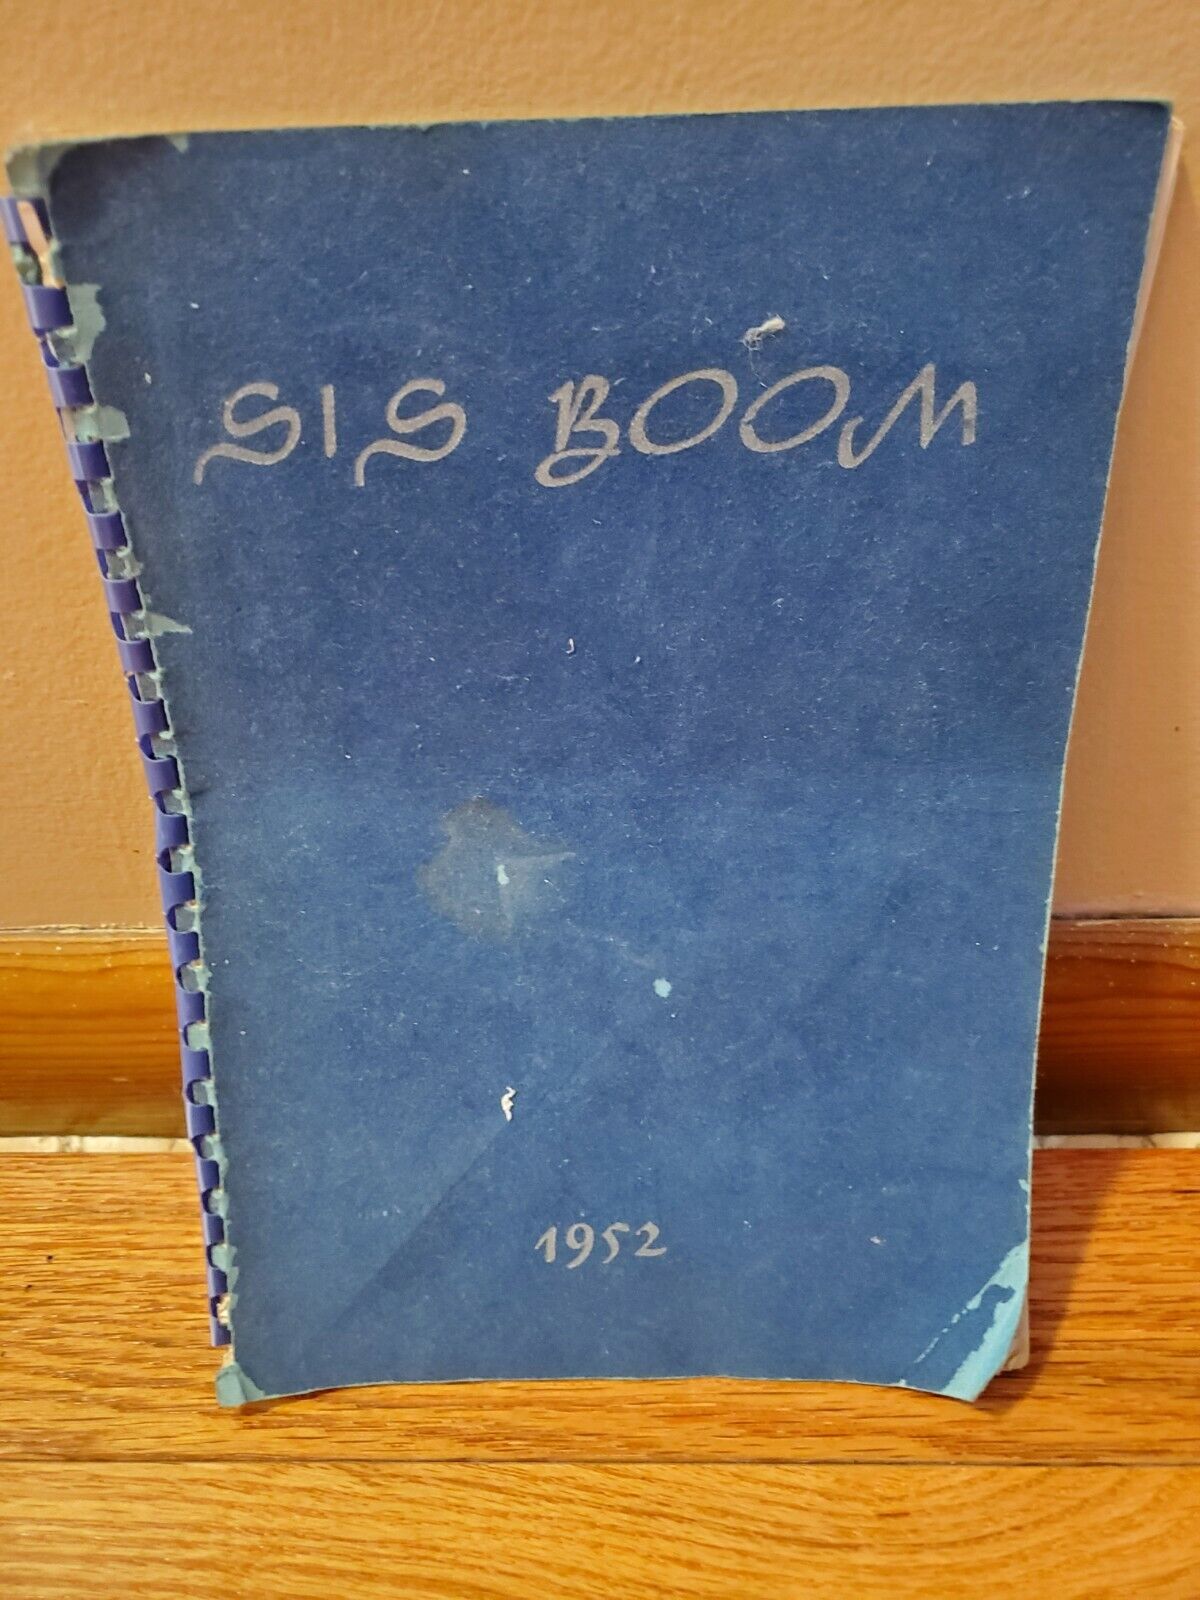 Vintage 1952 S.I.S. Boom Yearbook